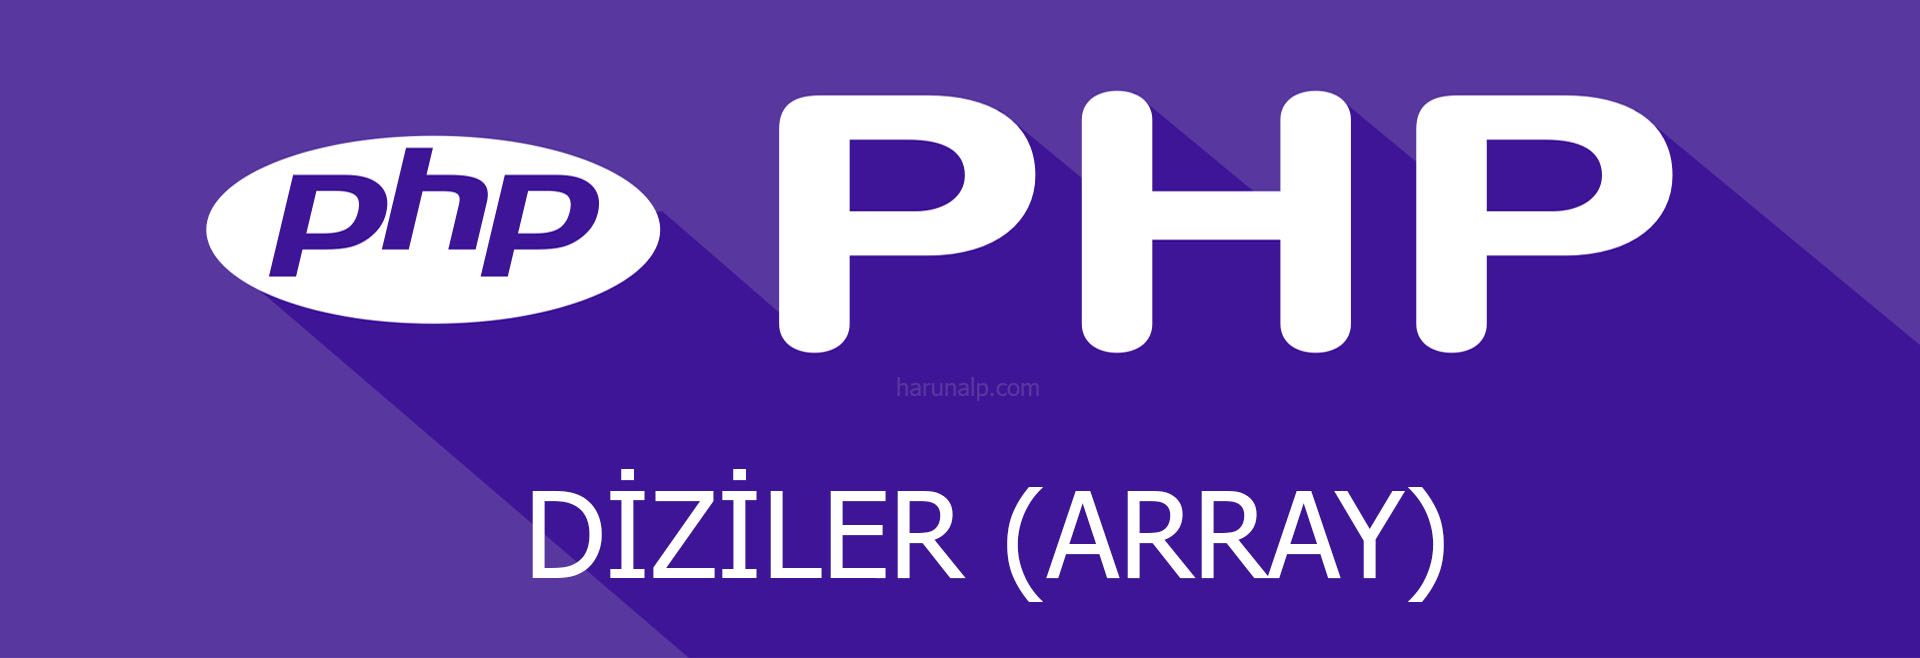 Php – Diziler (Array)